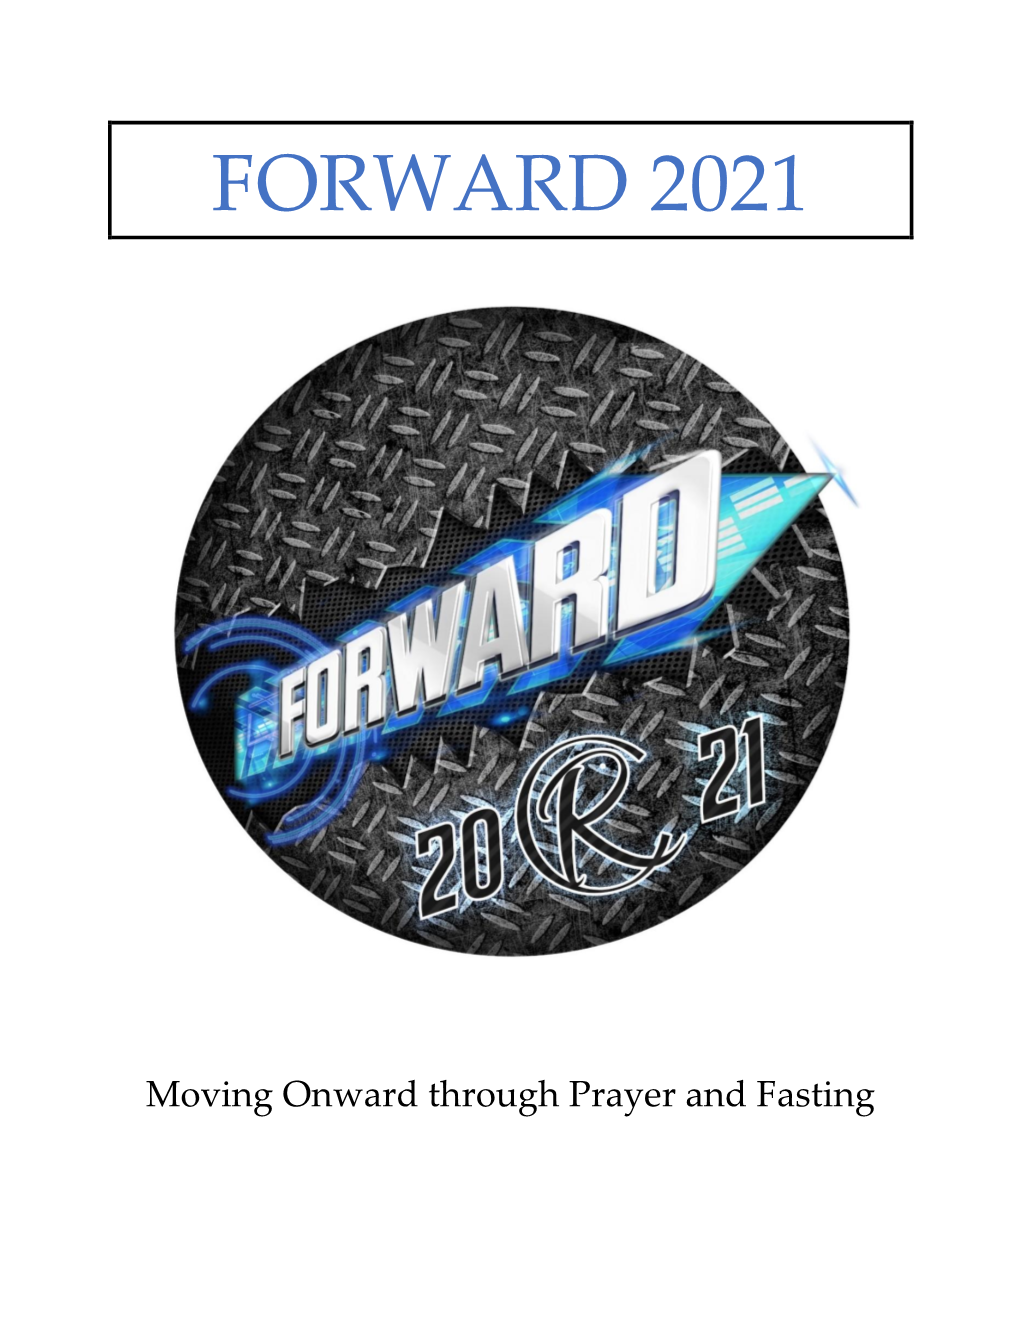 2021 Prayer and Fasting